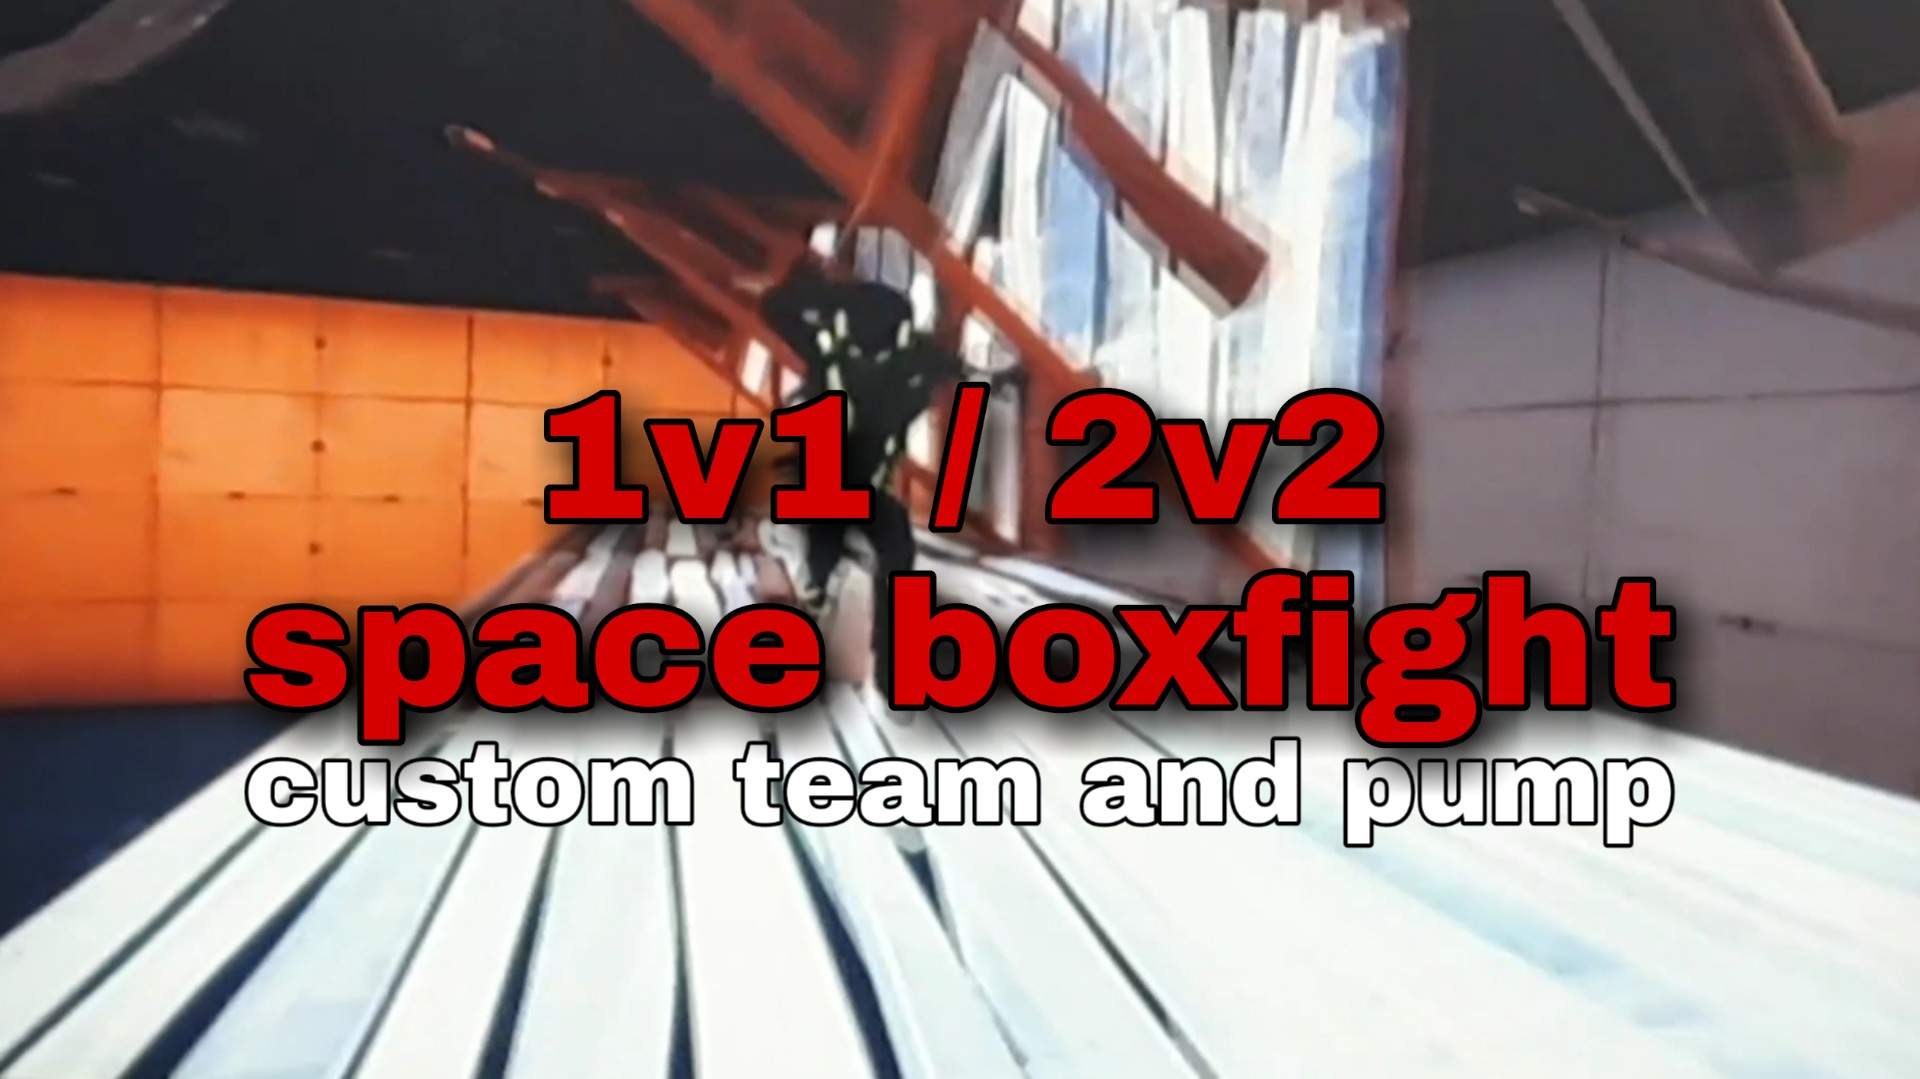 2VS2 SPACE BOXFIGHT